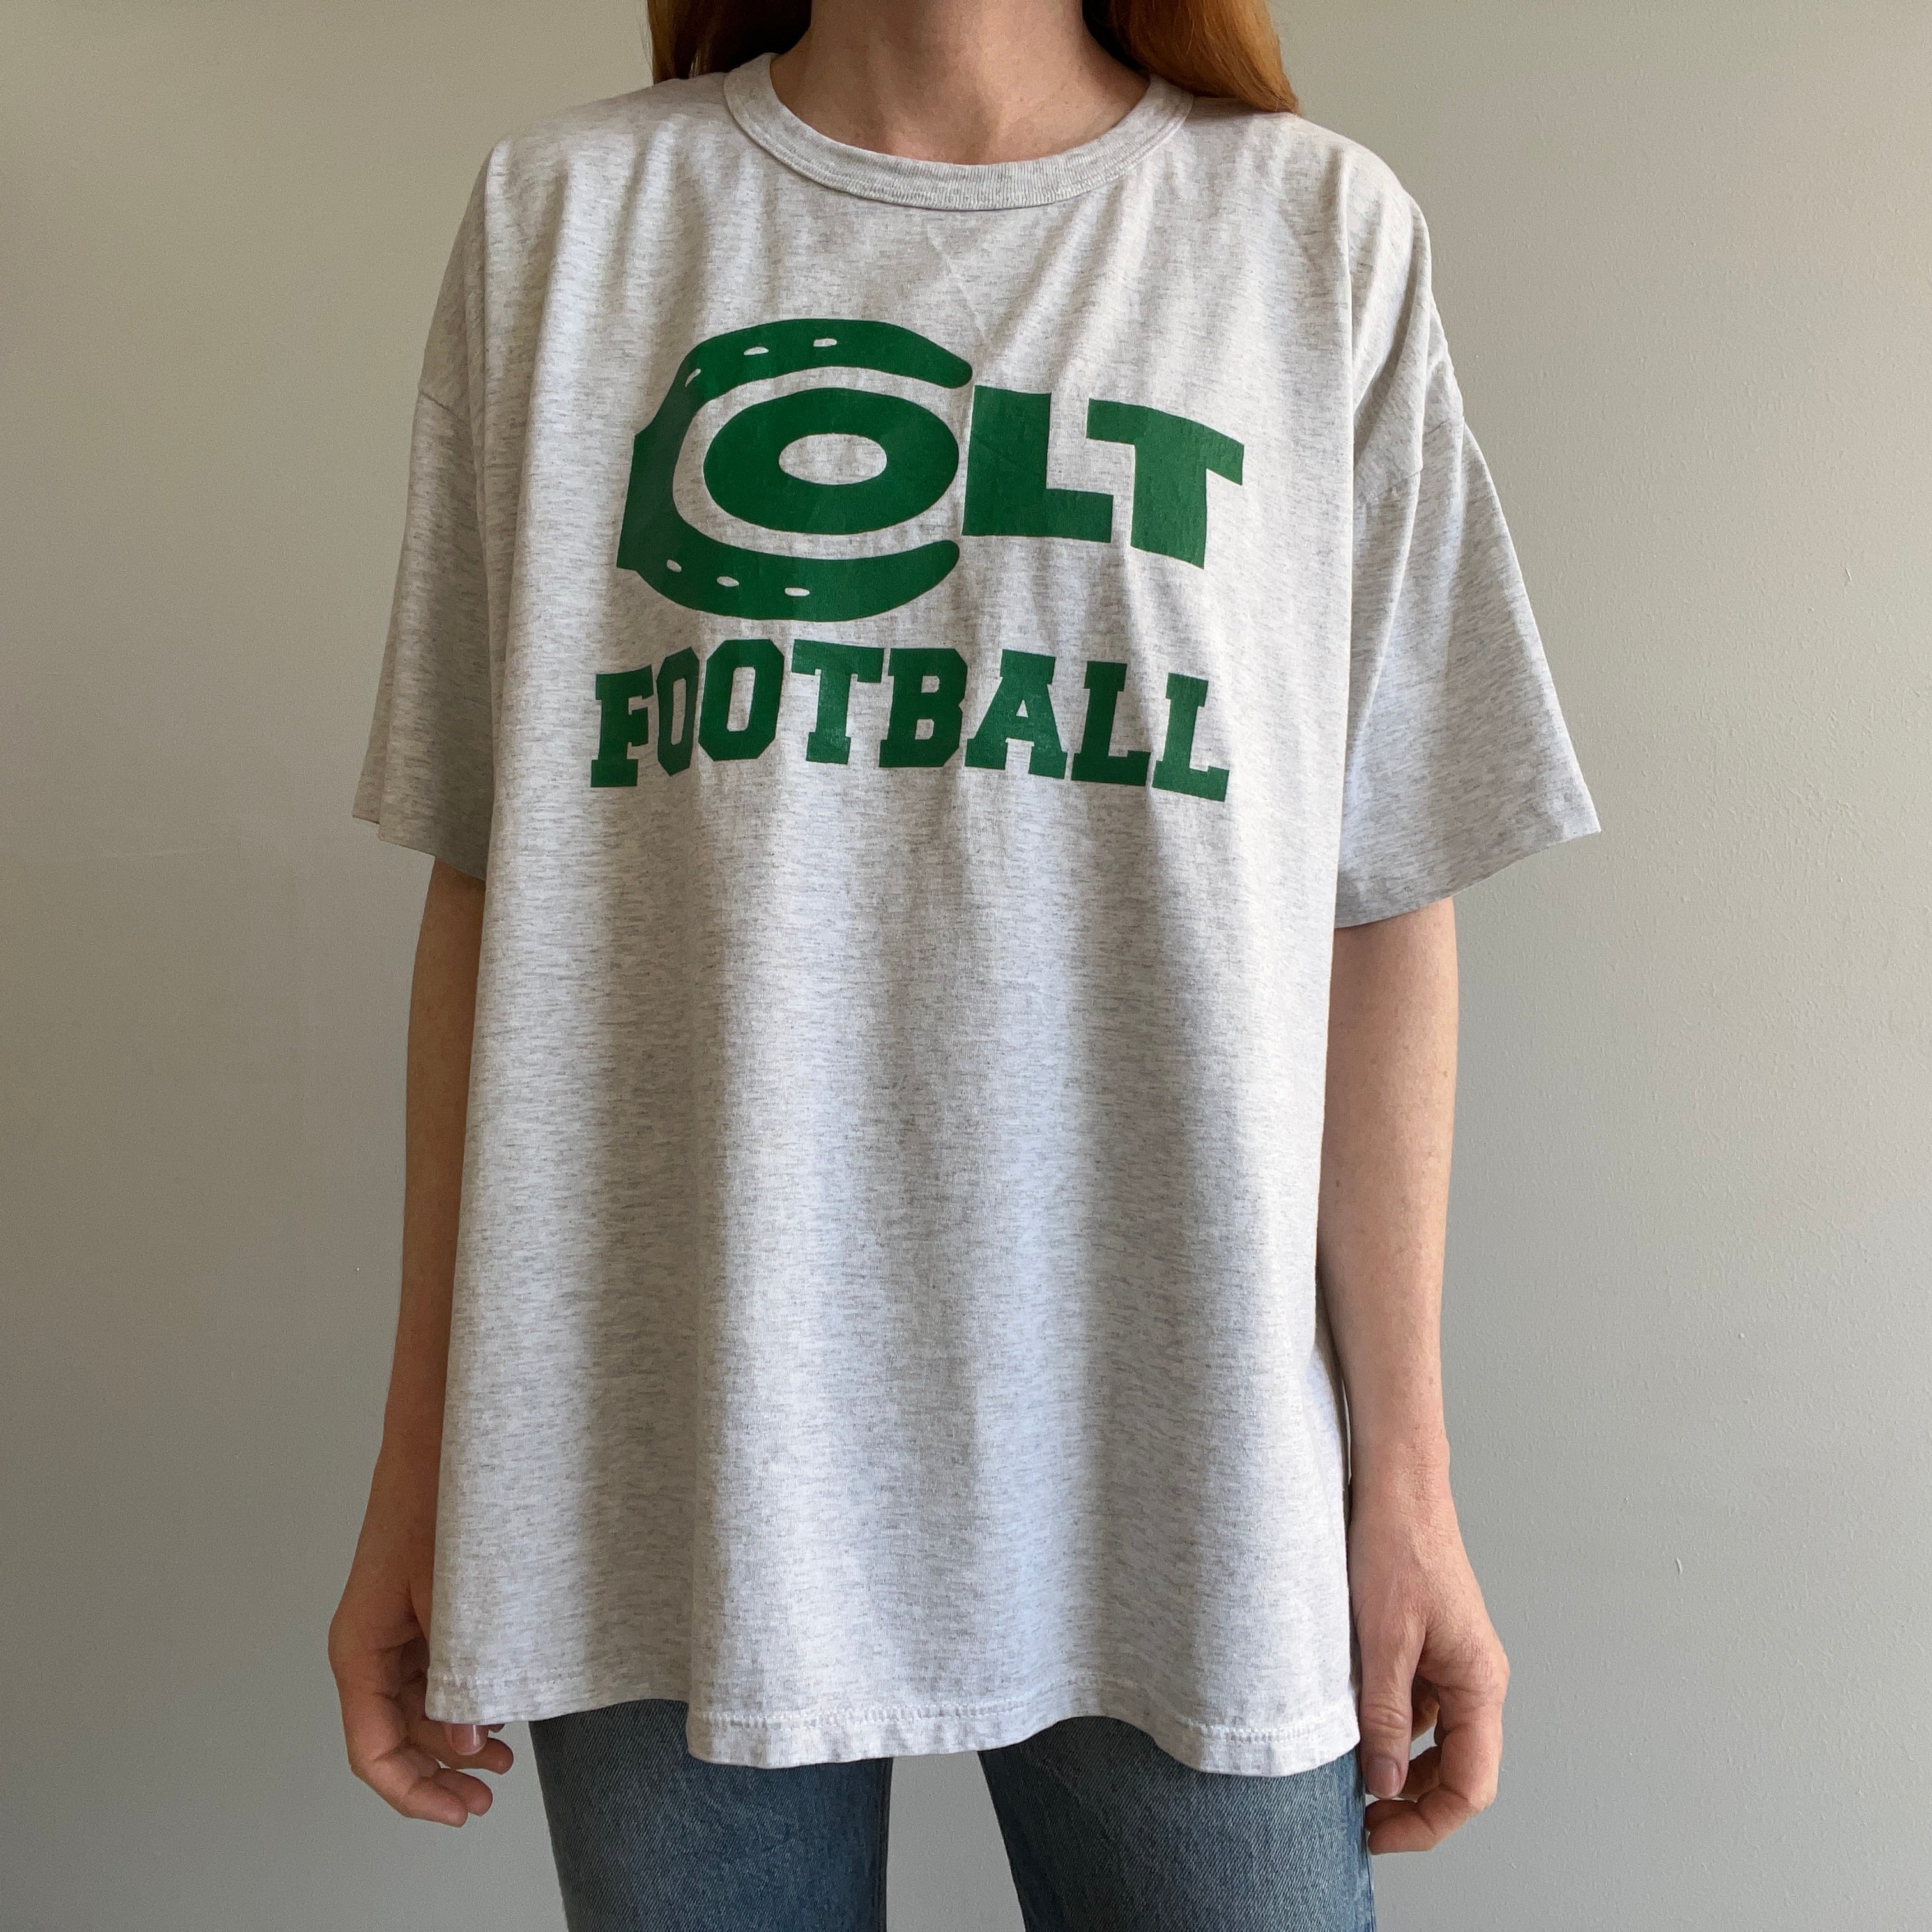 1990s Colt Football Super Boxy T-Shirt